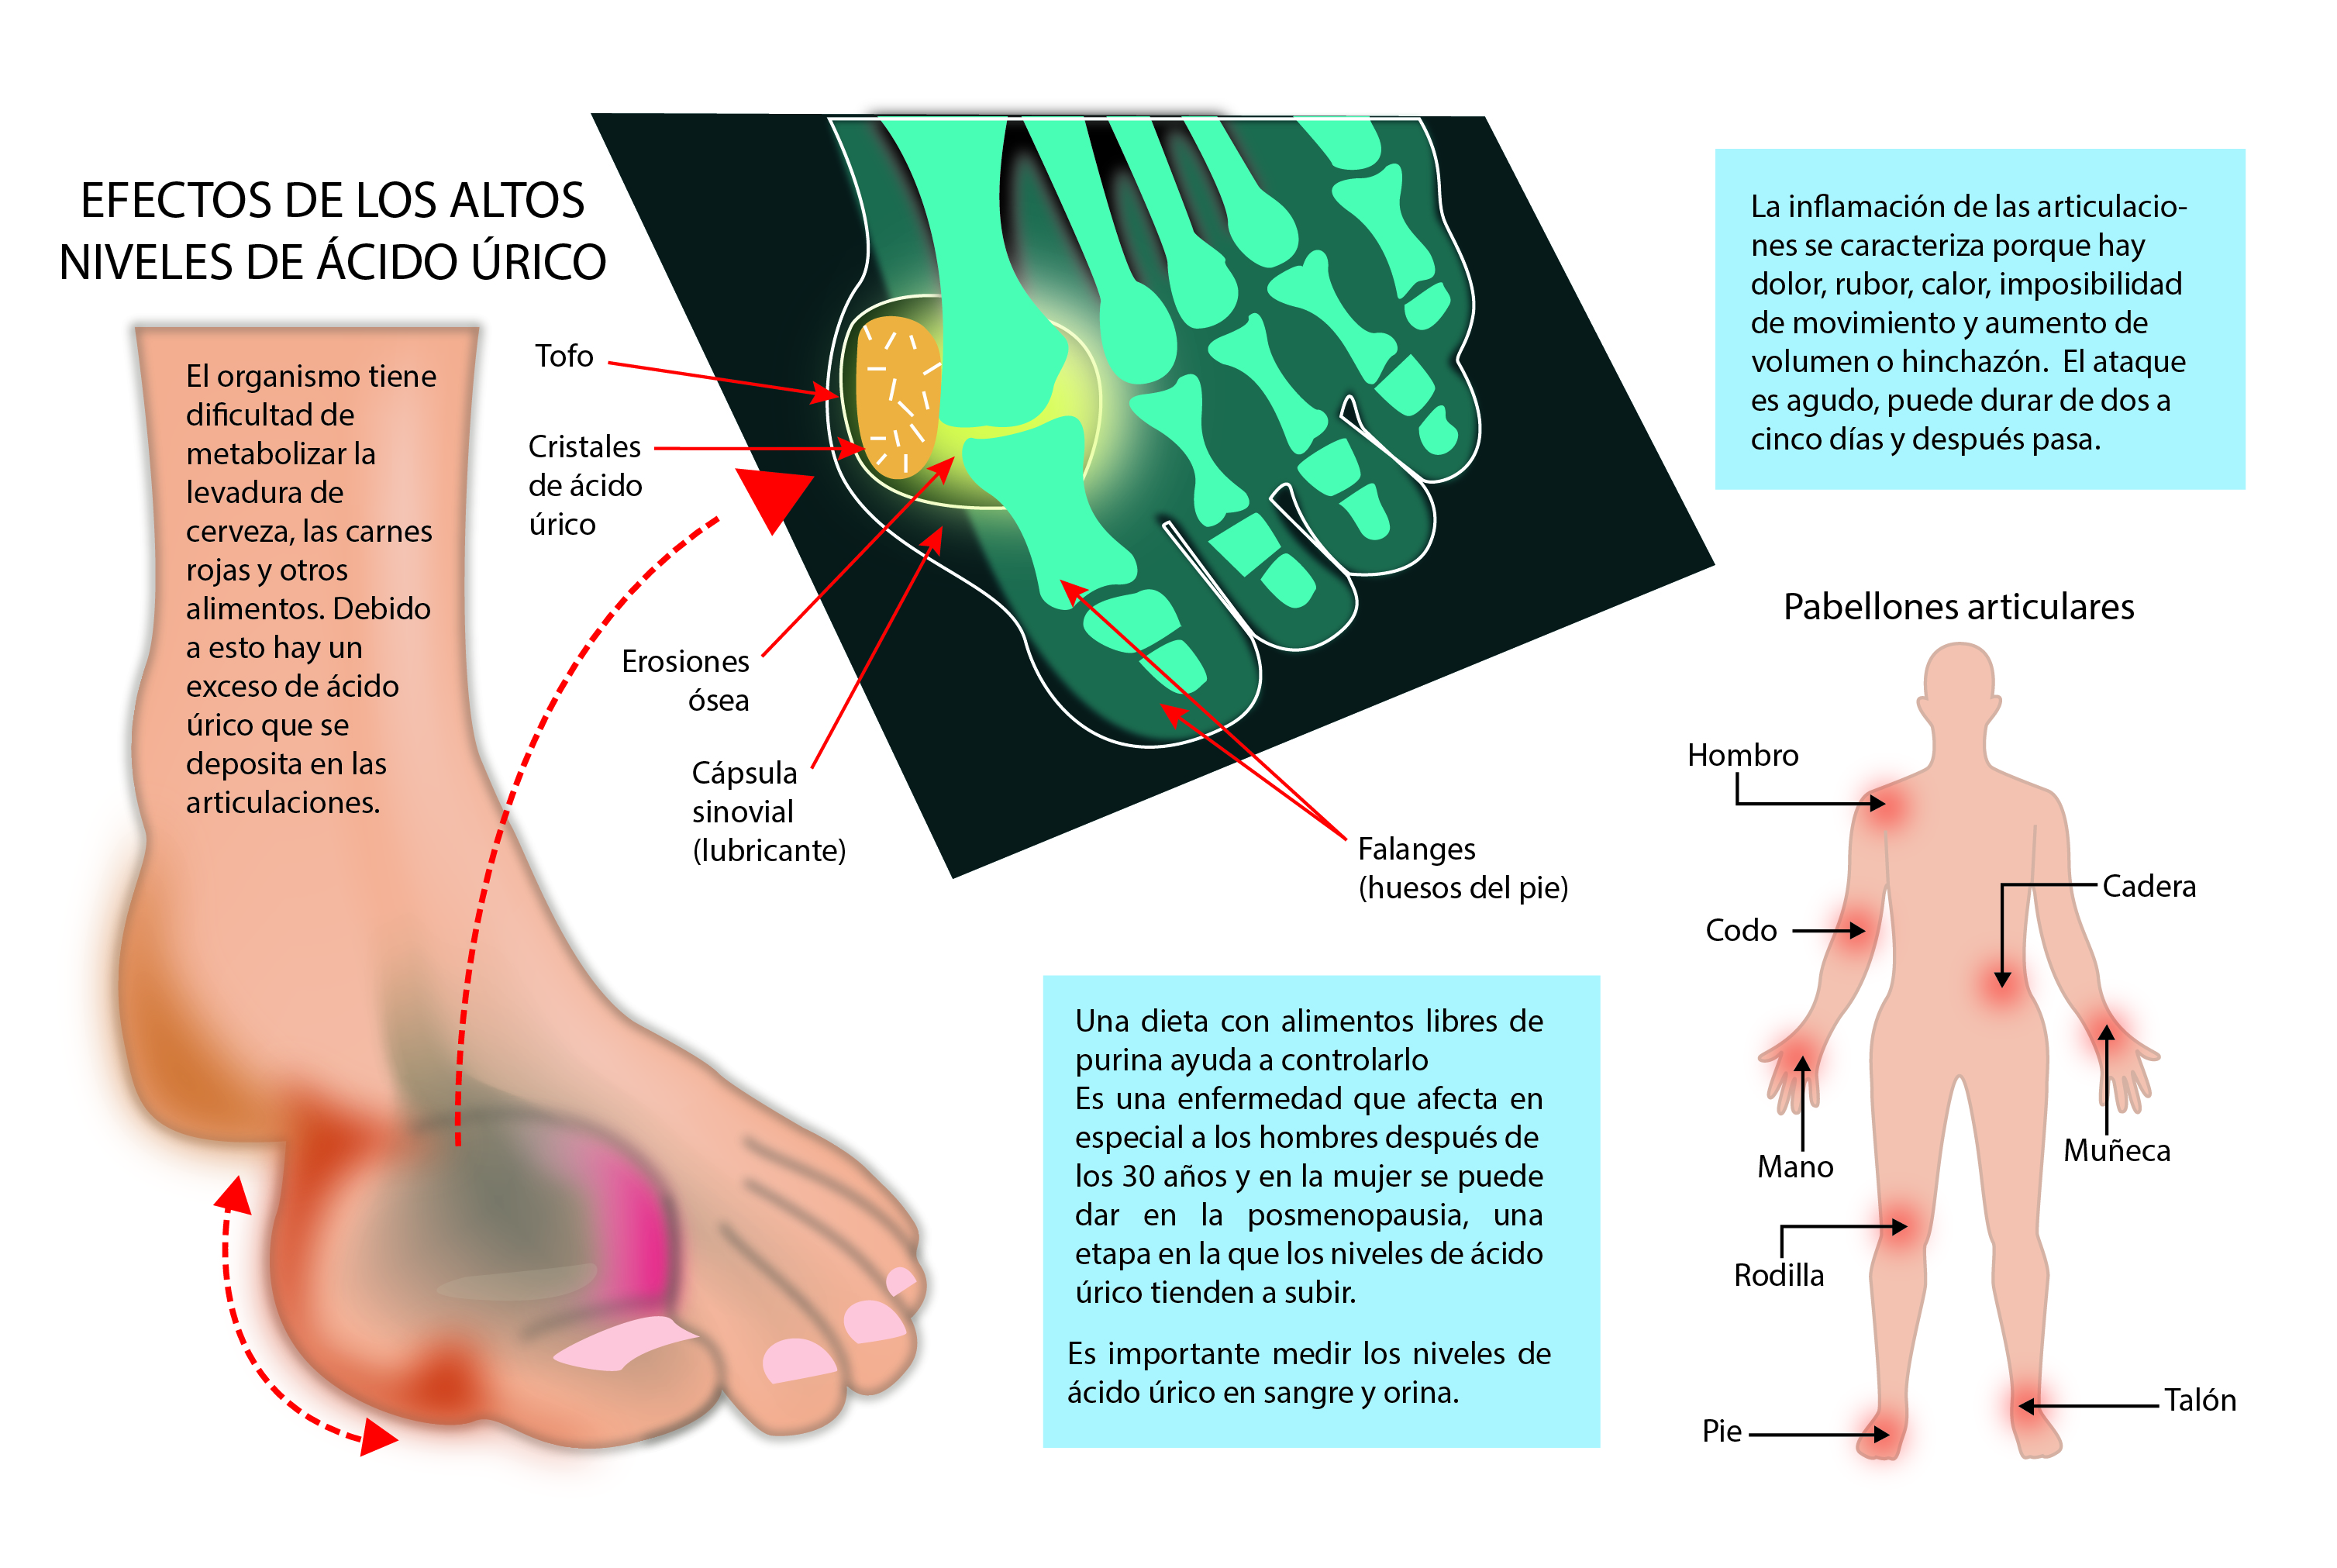 Acido folico para artritis reumatoide